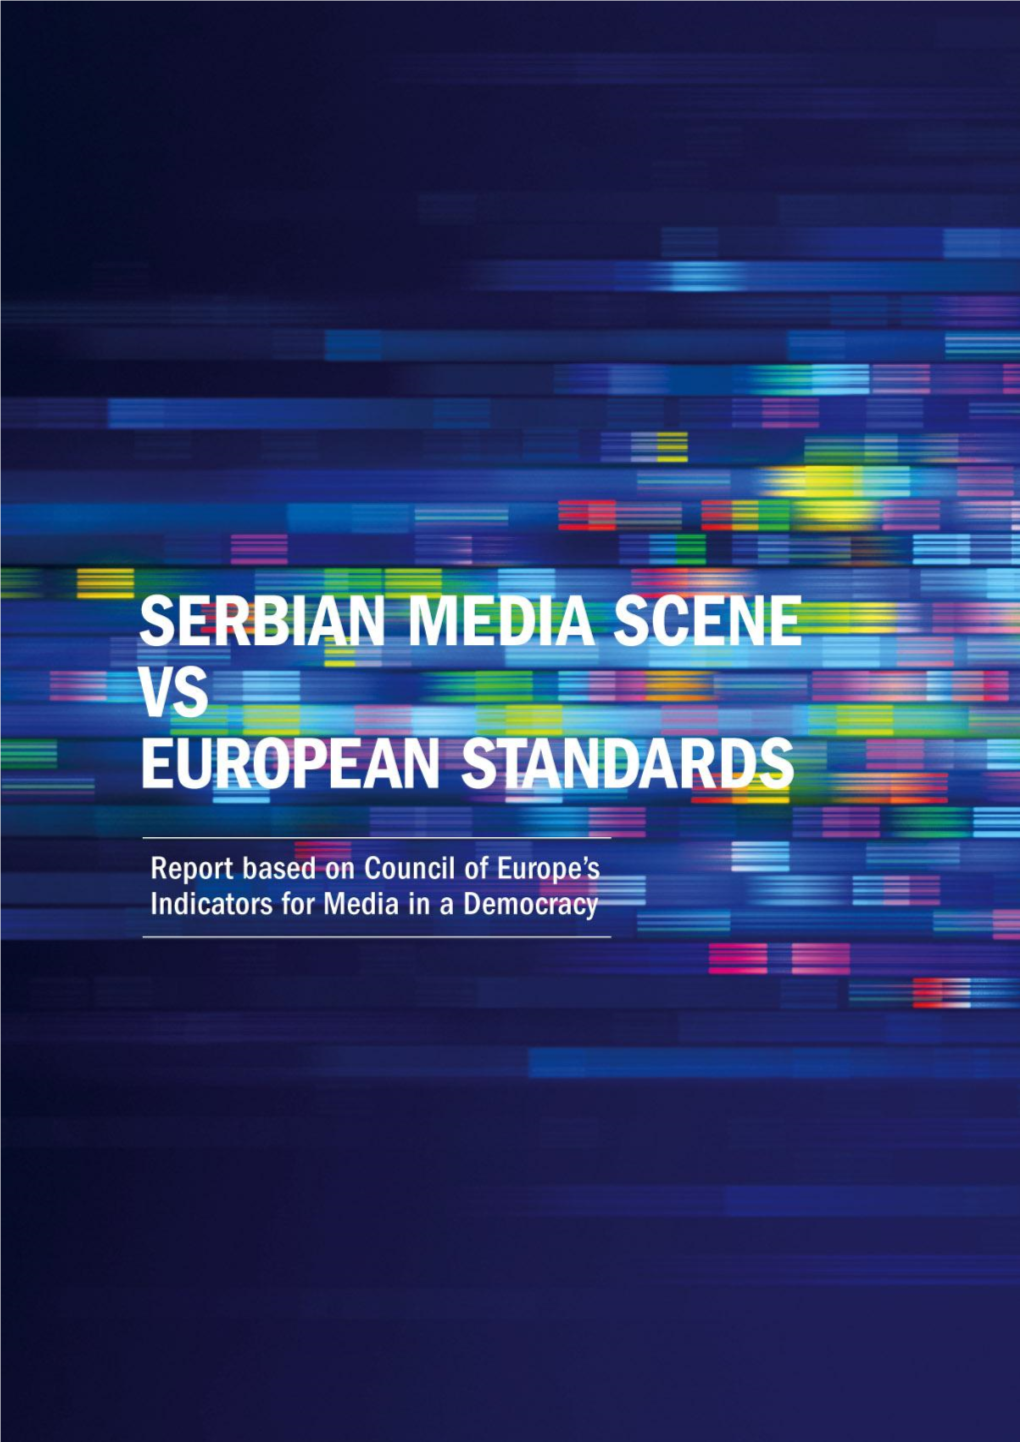 The Publication "Serbian Media Scene VS European